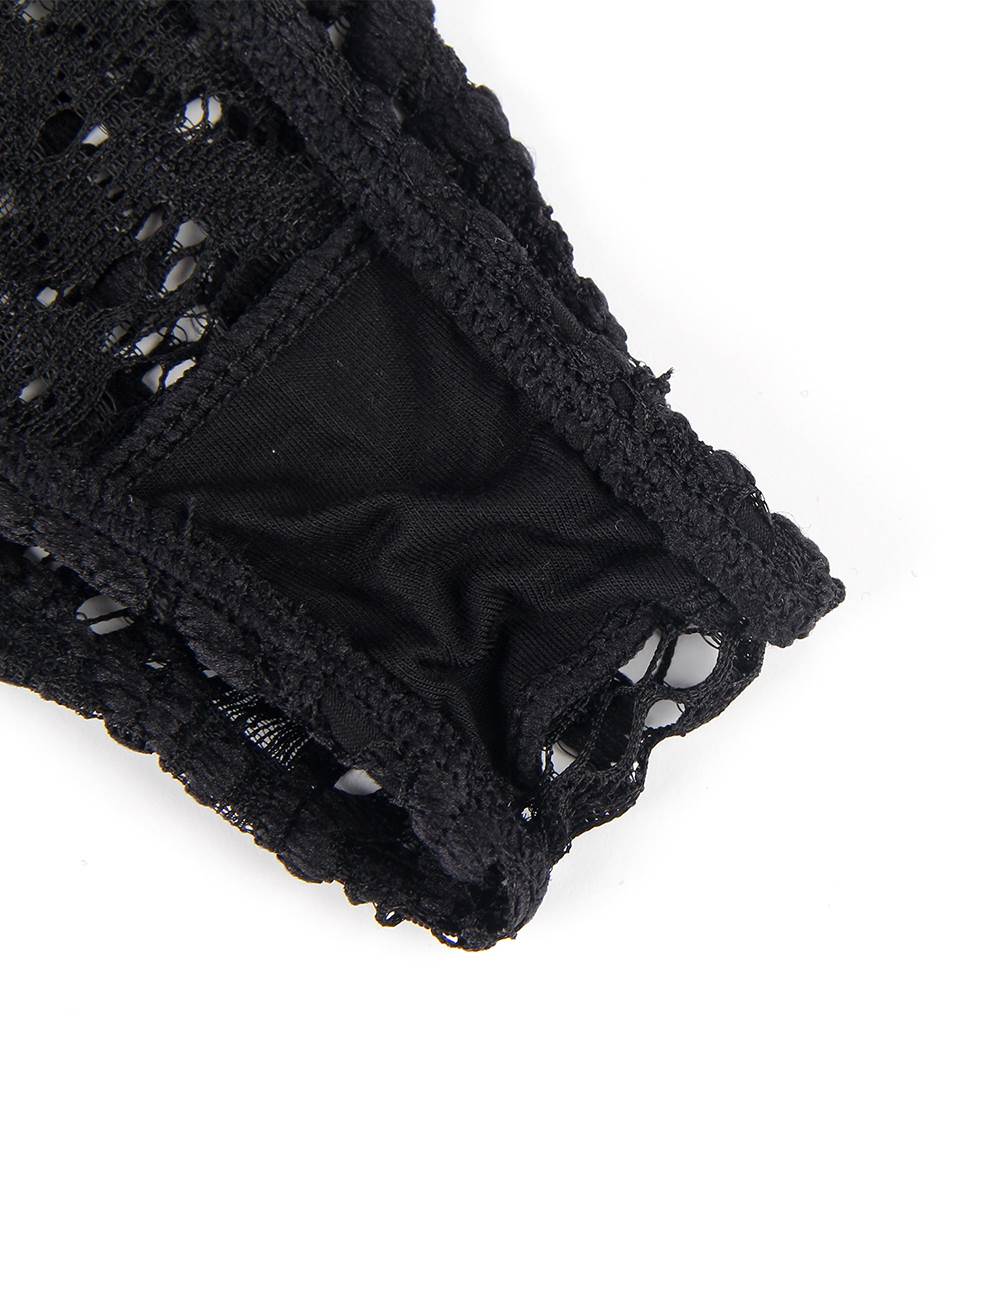 $5.38 Black Plus Size Push-up Cup Lace Teddy|Ohyeahlady.com